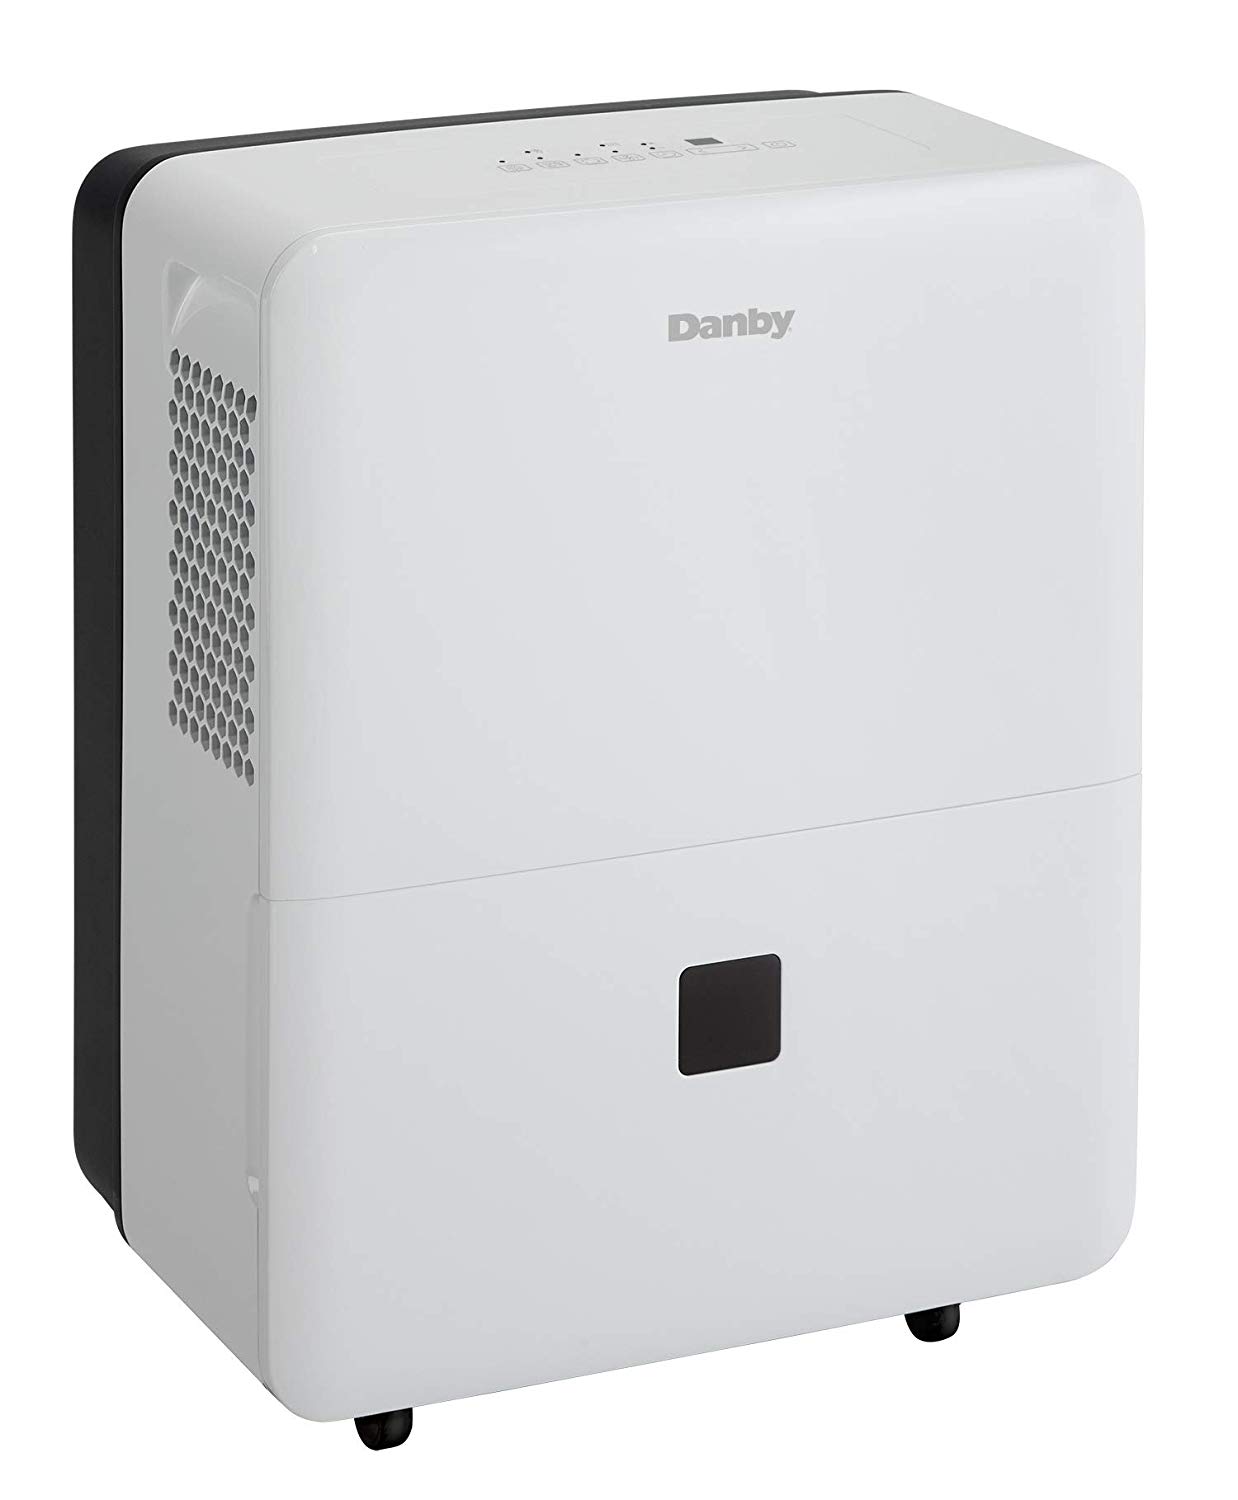 Danby DDR030BDWDB Energy Star Desumidificador de 30 litros